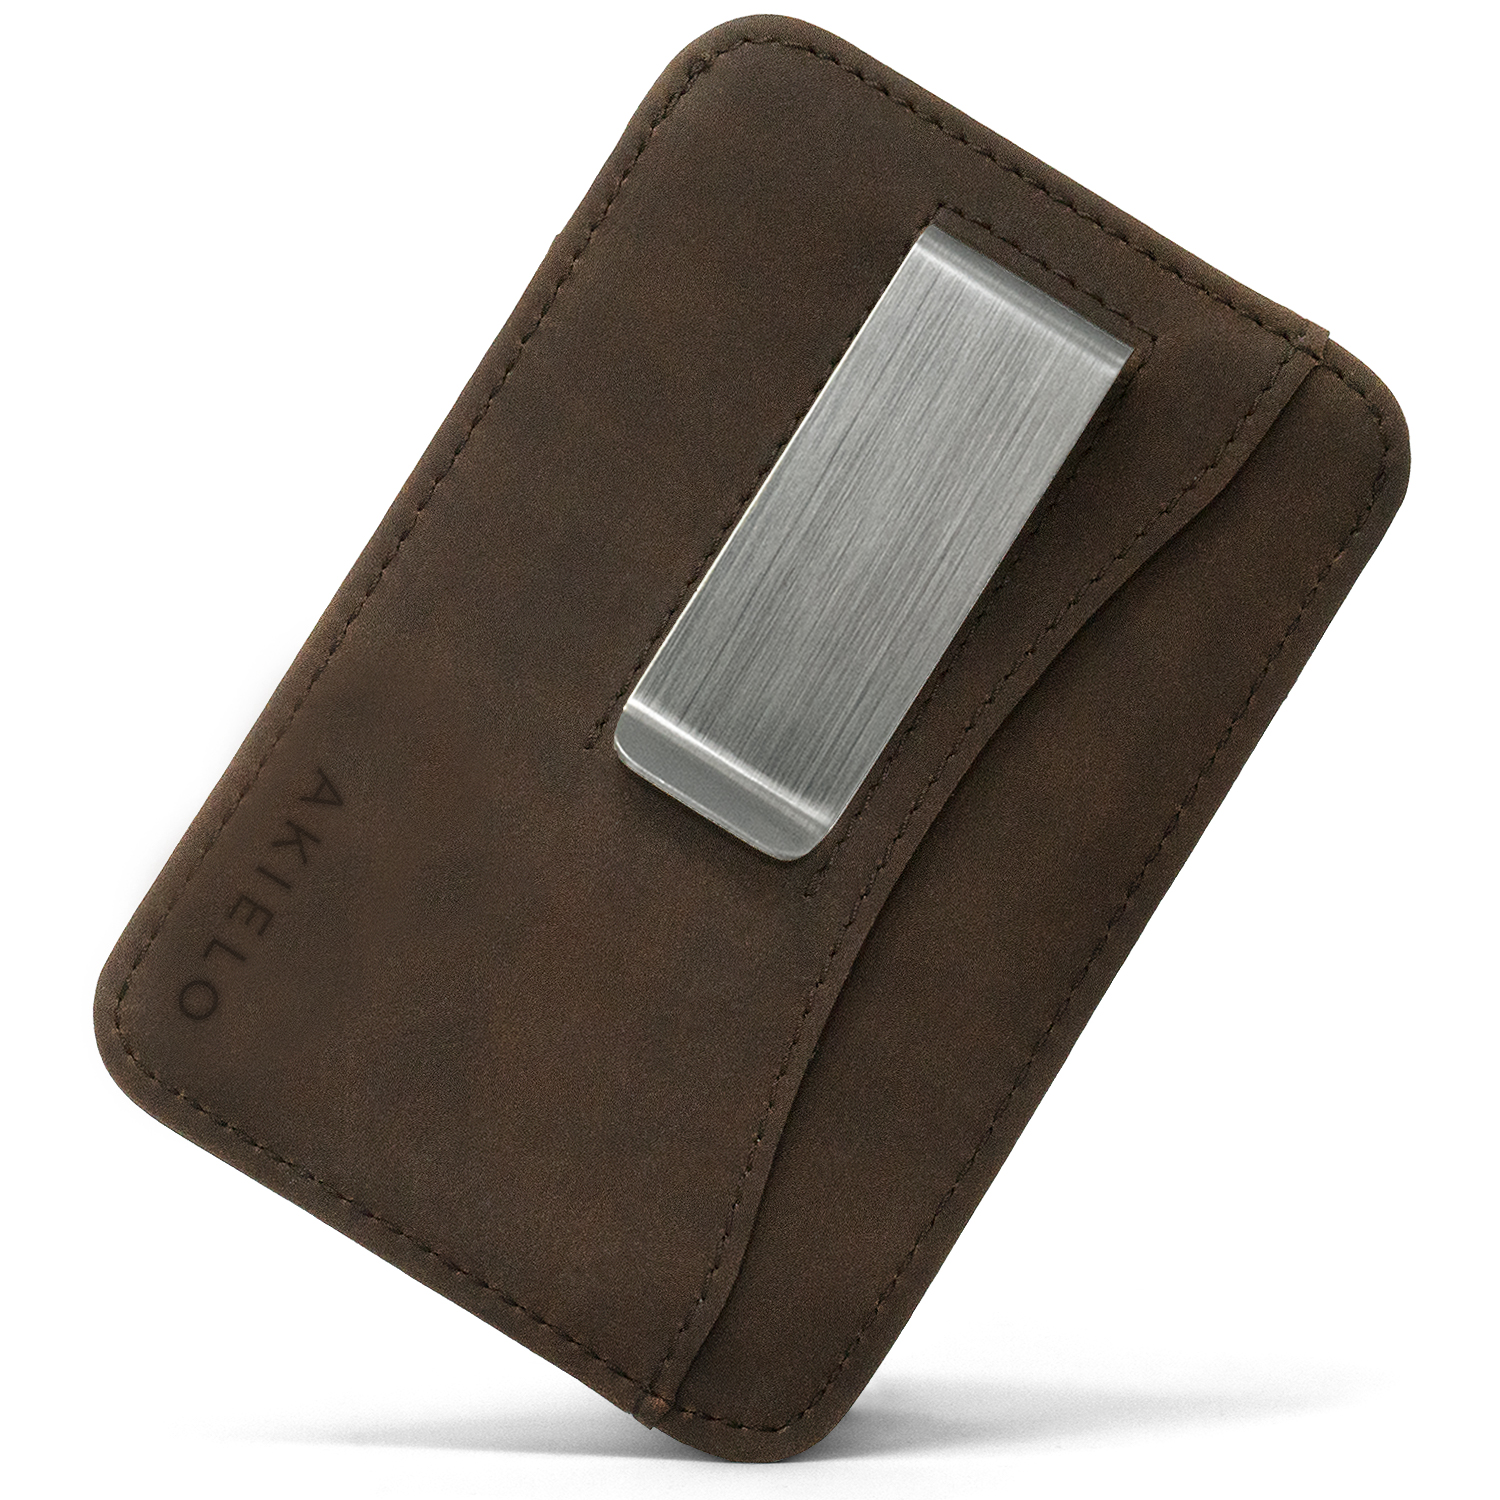 Brown RFID blocking credit card holder wallet with Money Clip